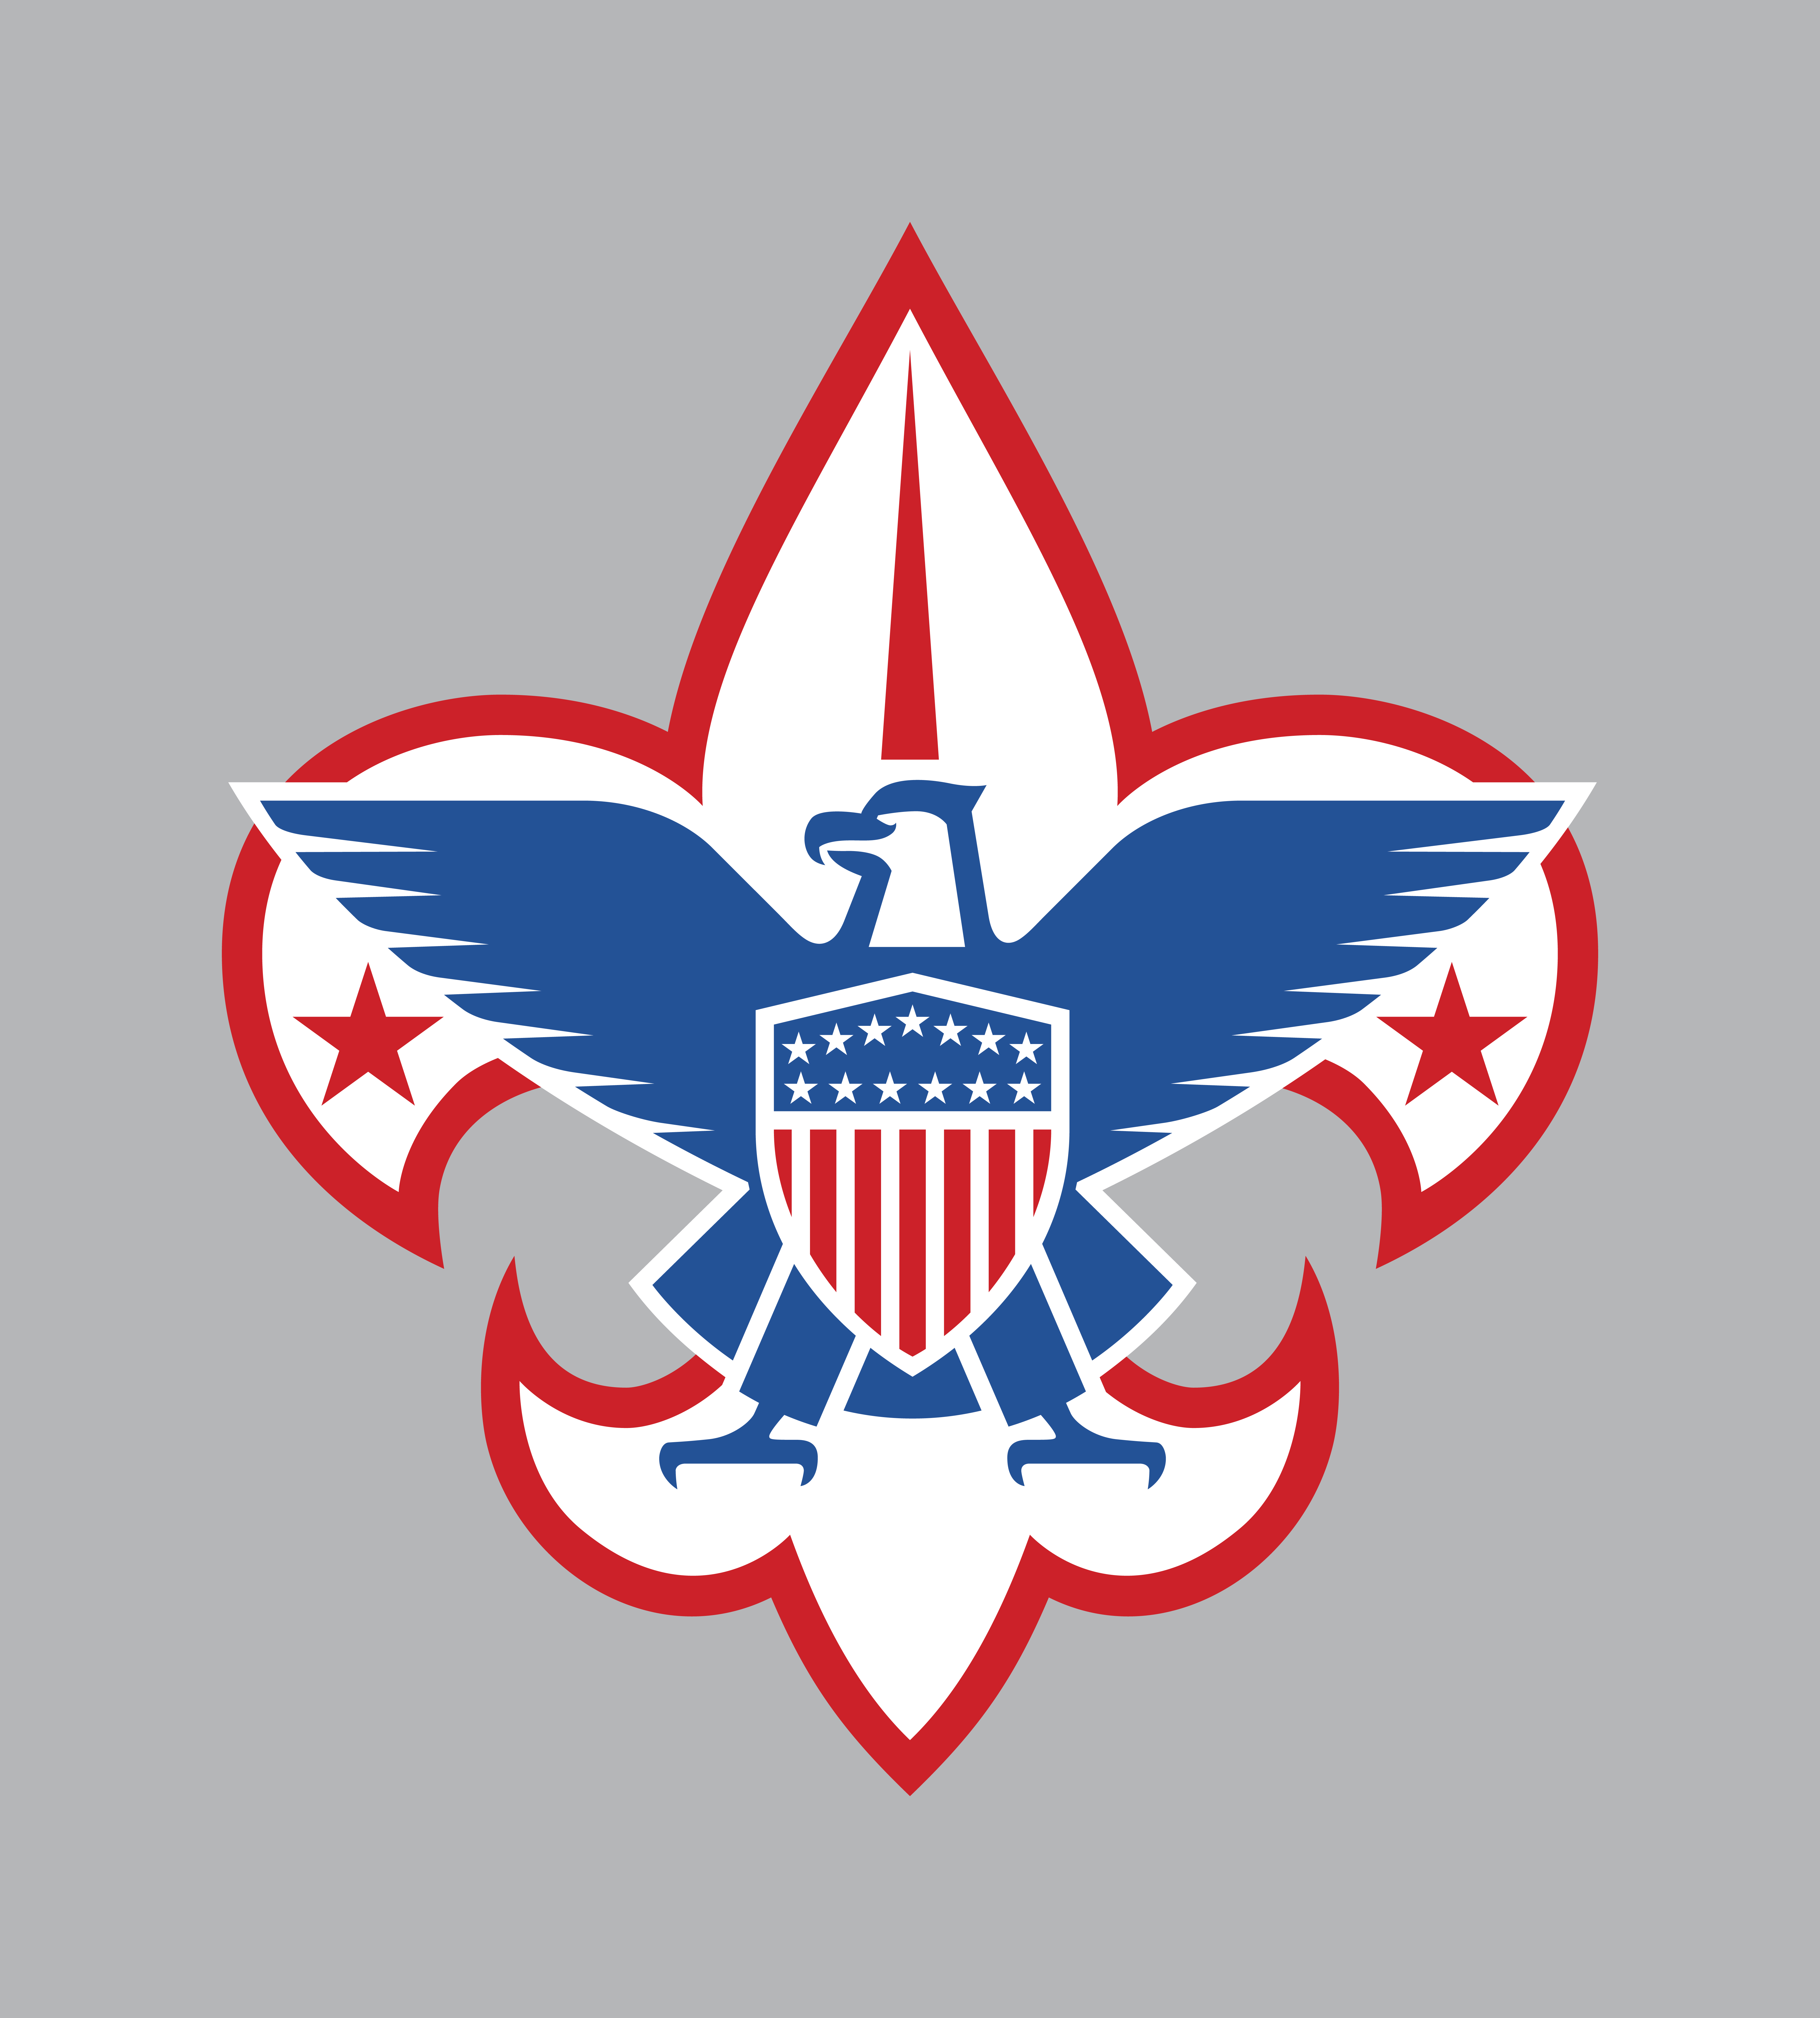 Boy Scout Logo clipart free image.